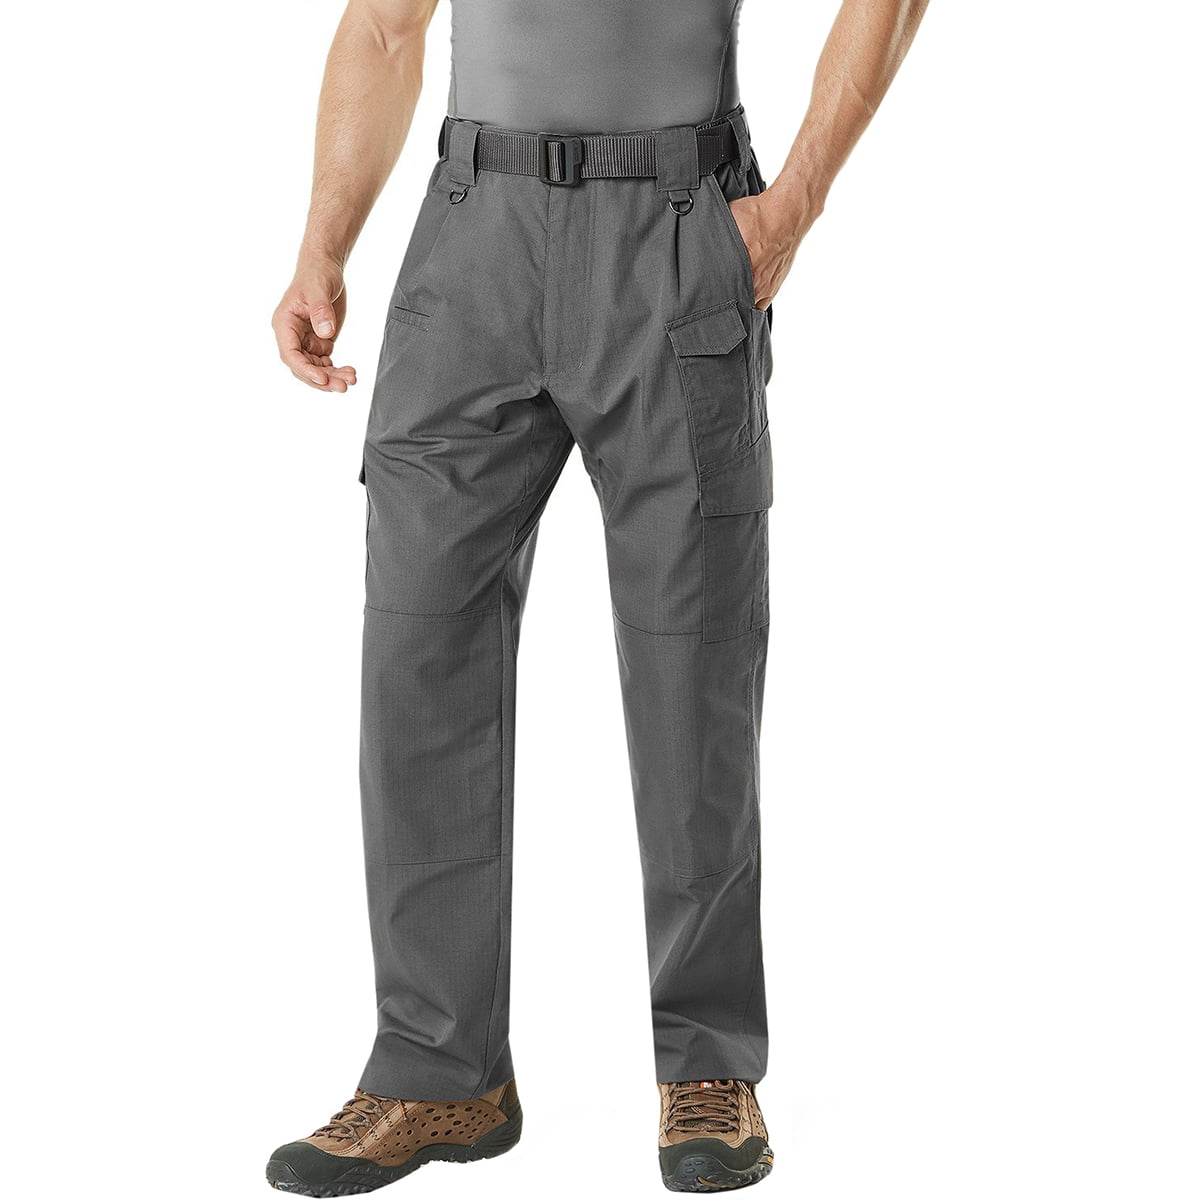 Water Resistant Stretch Cargo Pants CQR Men's Flex Ripstop Tactical Pants Lightweight EDC Hiking Work Pants 